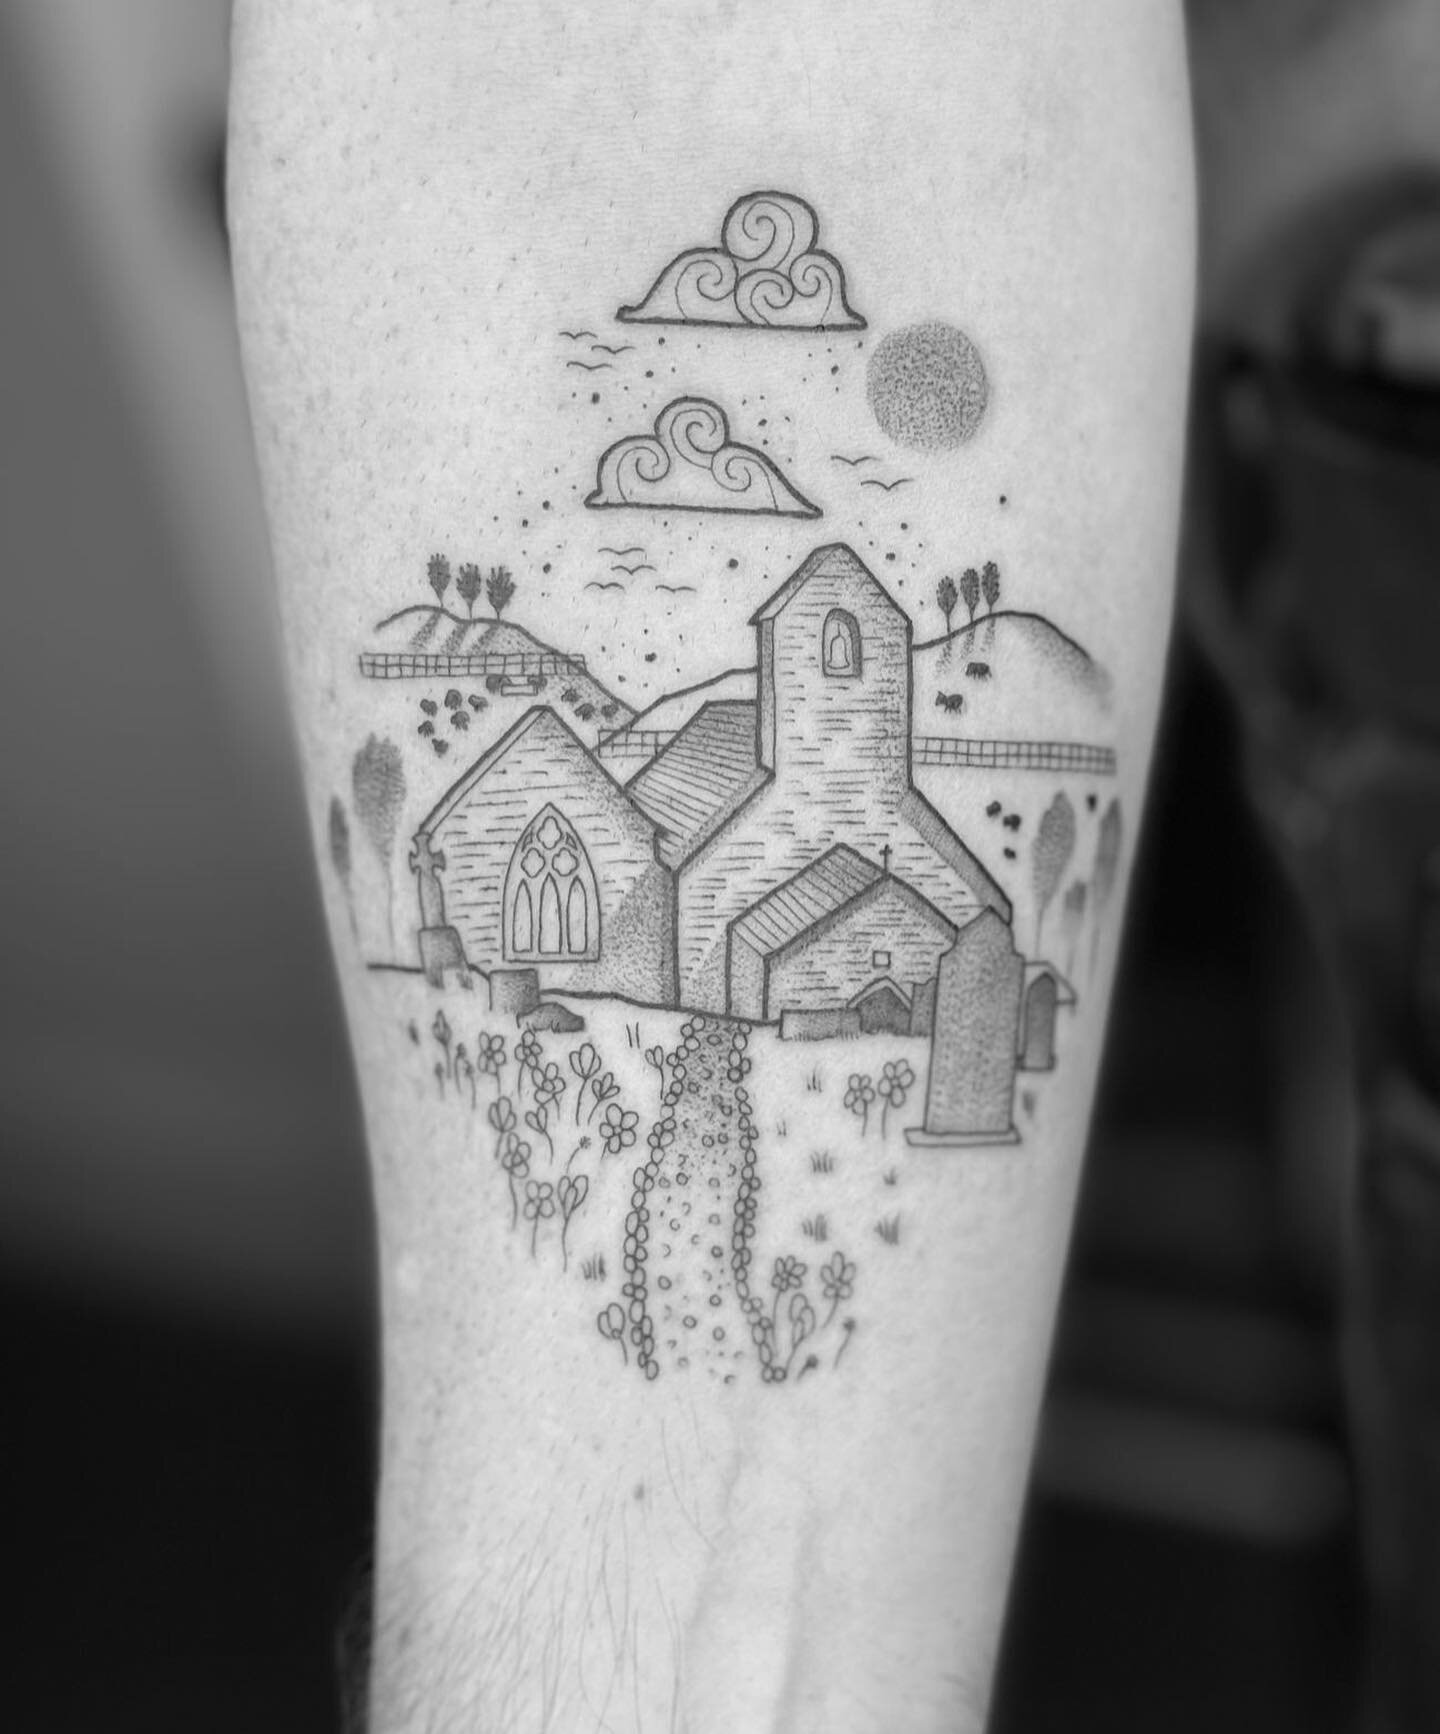 A little fineline piece for @timstreamer3 🤘🏼
.
.
.
.
#finelinetattoo #tattooideas #tattoo #tattoodesign